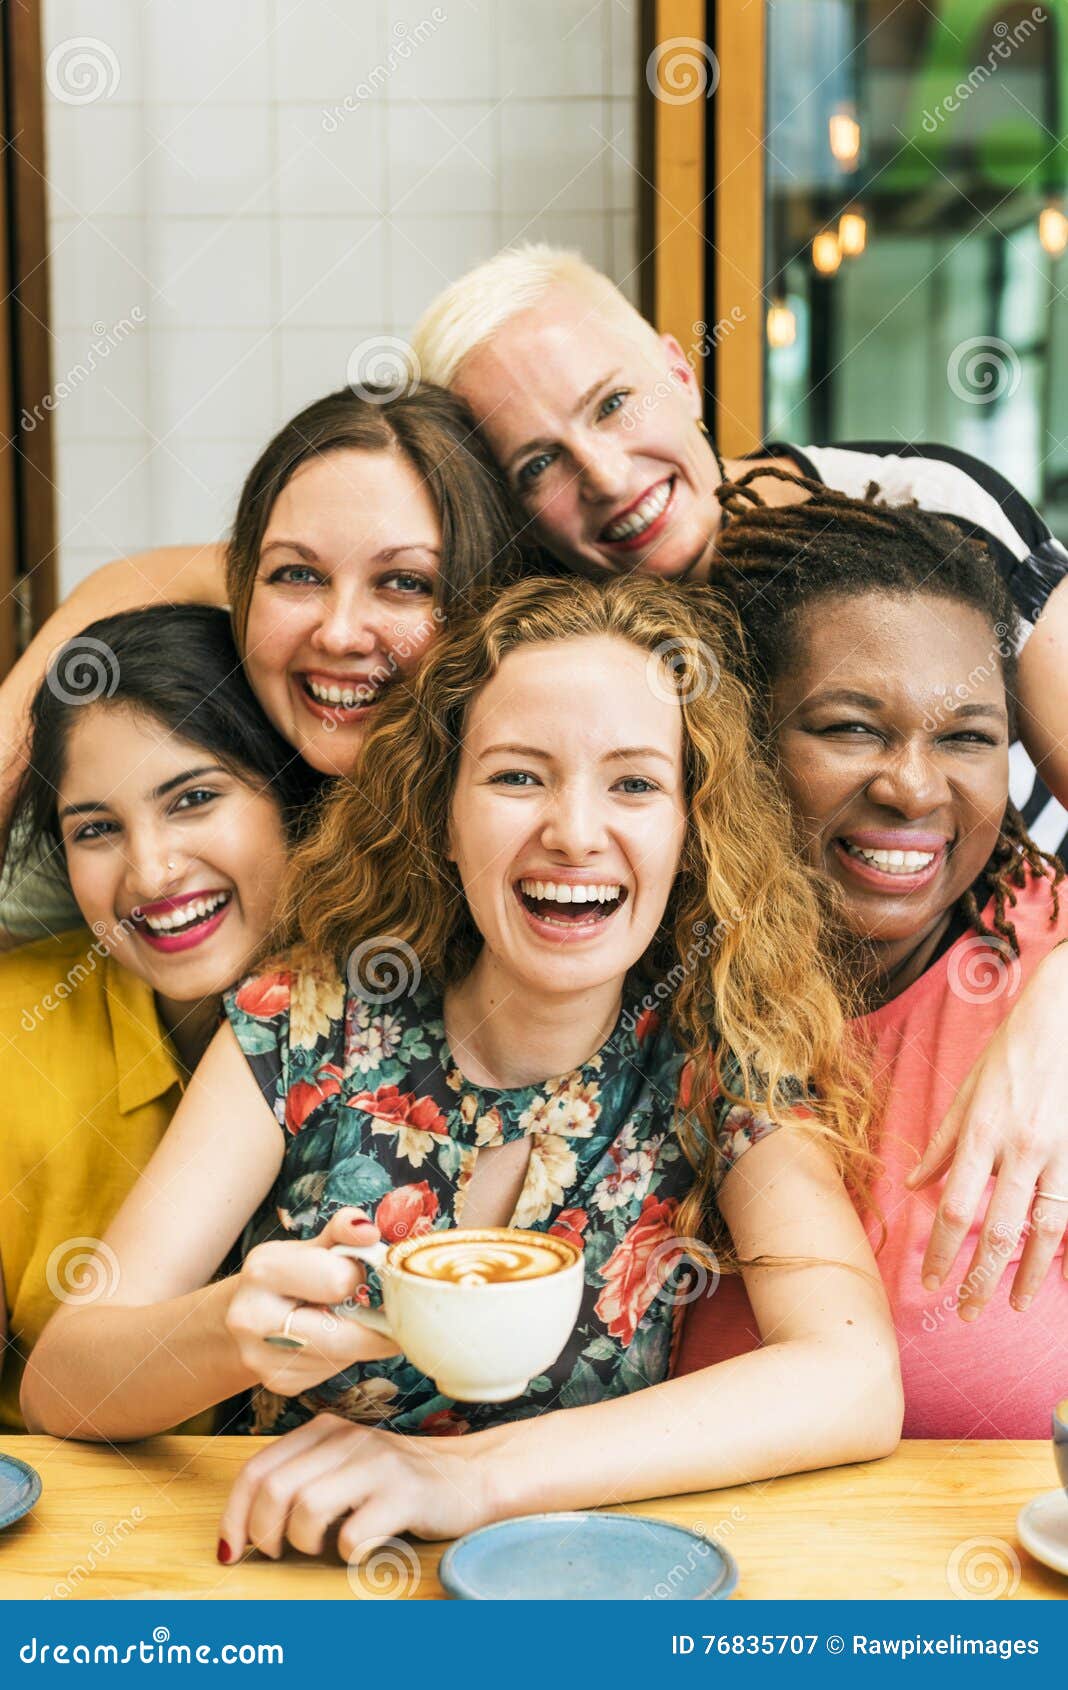 diversity women socialize unity together concept